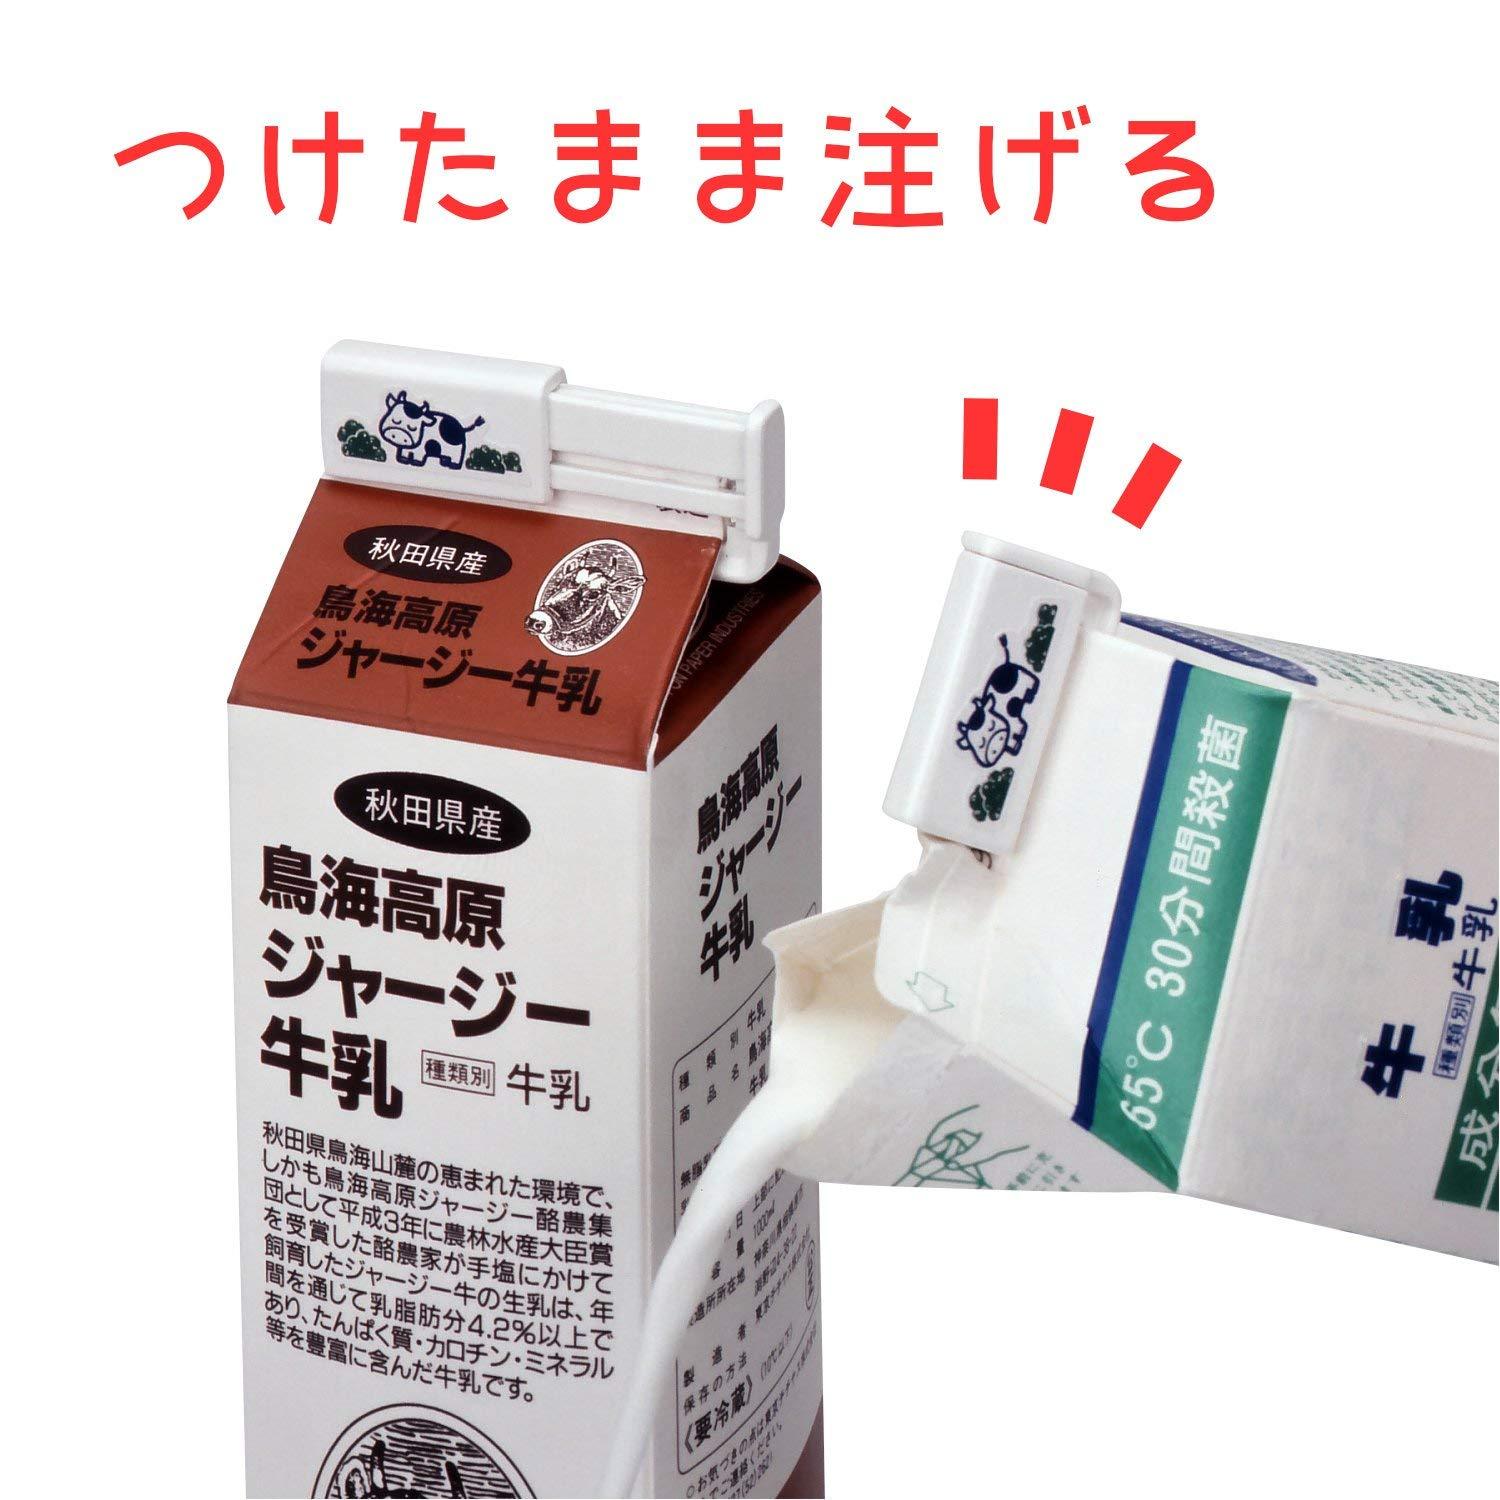 Lec Milk Carton Sealer K-533